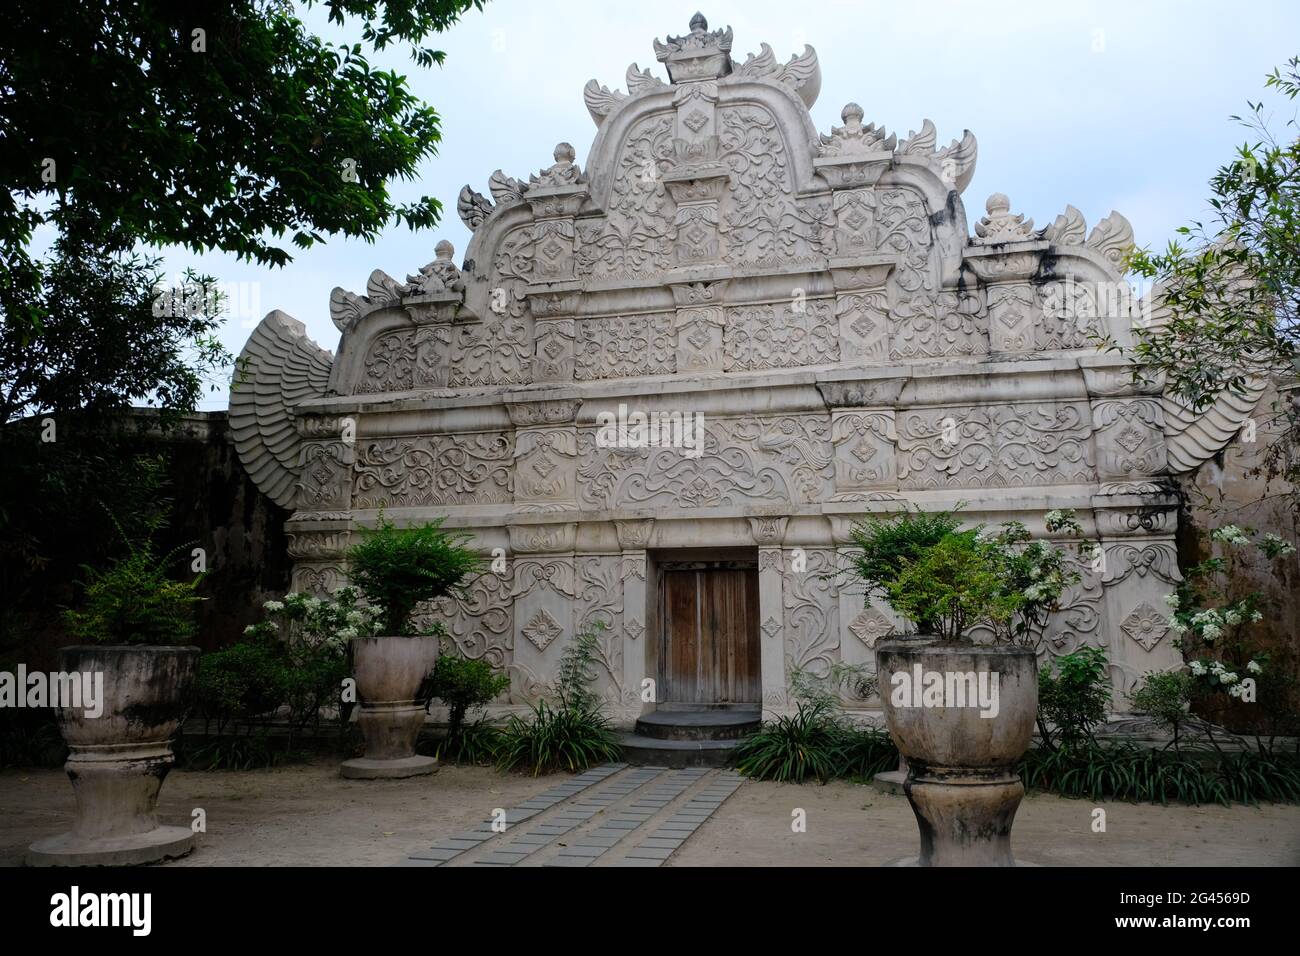 Indonesia Yogyakarta - Tamansari Water Castle - gate into Taman Sari Stock Photo